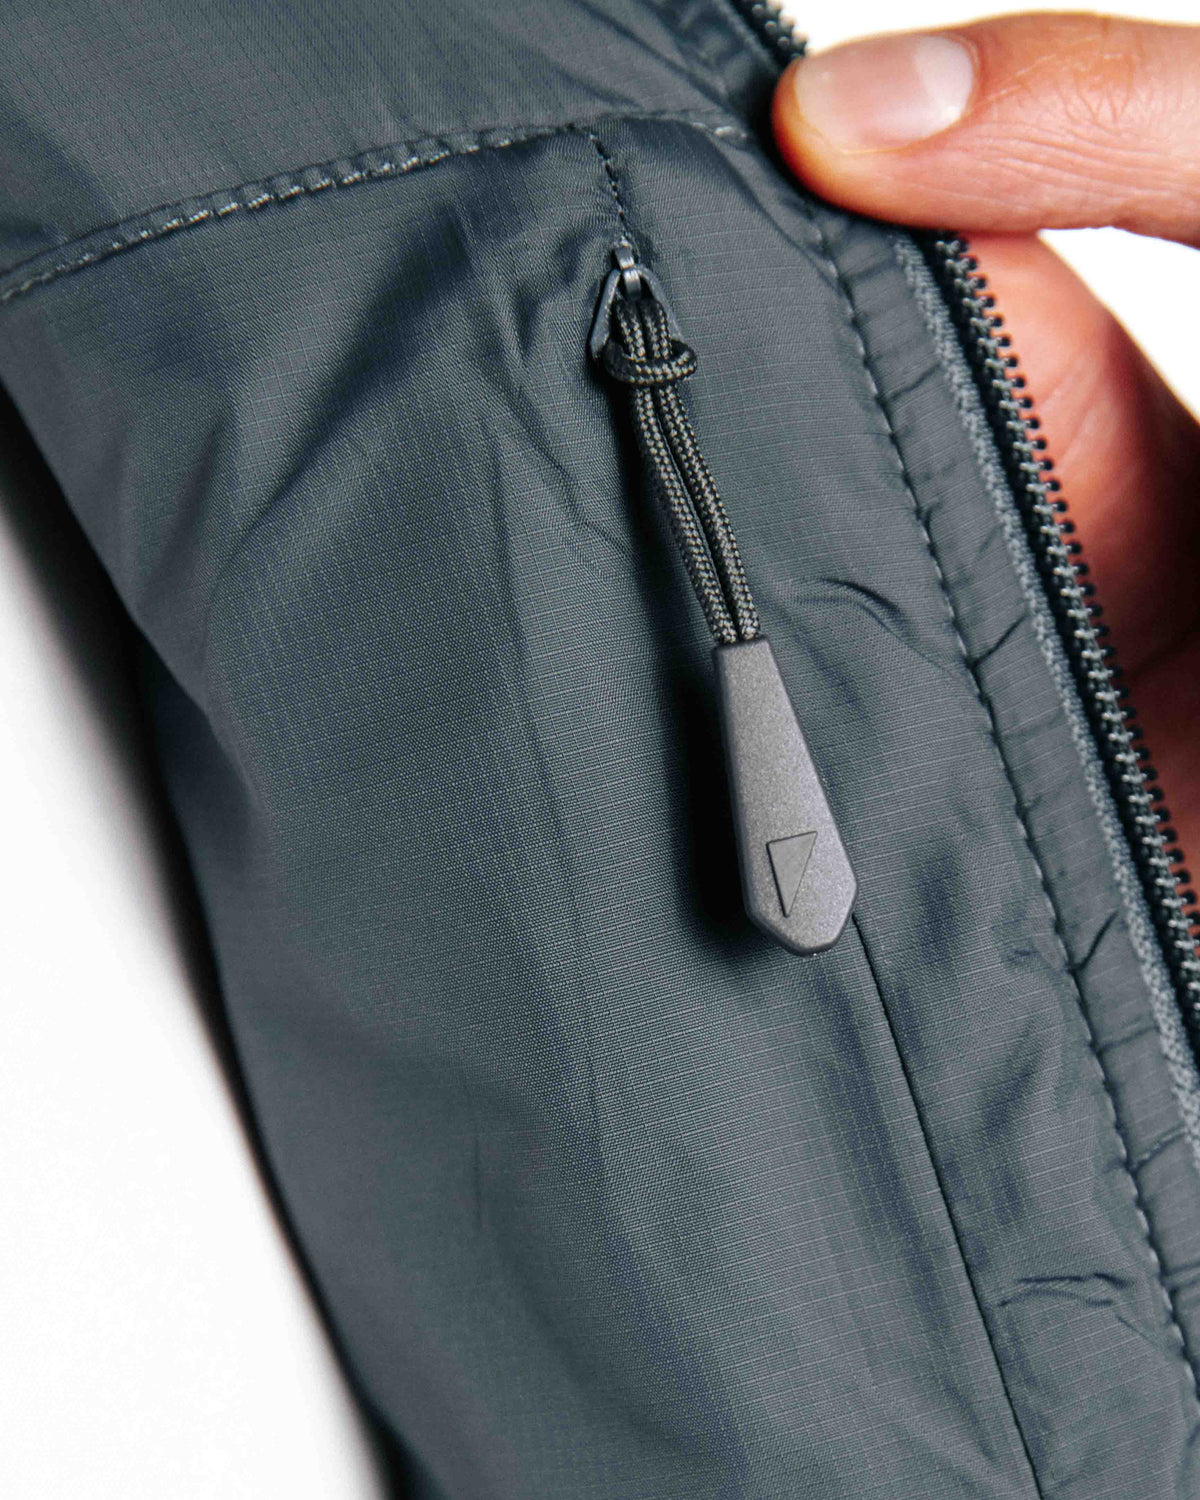 The Primo Golf Dark Gray Vest inner zipper